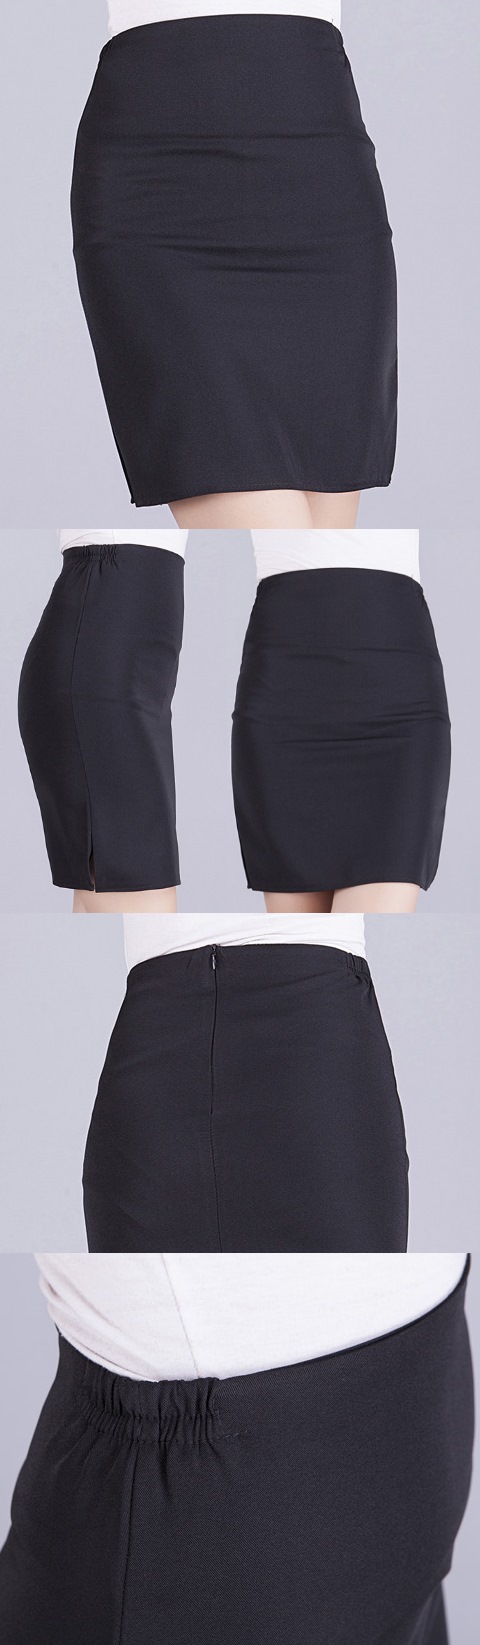 Restaurant Uniform - Waitress Skirt (Black)